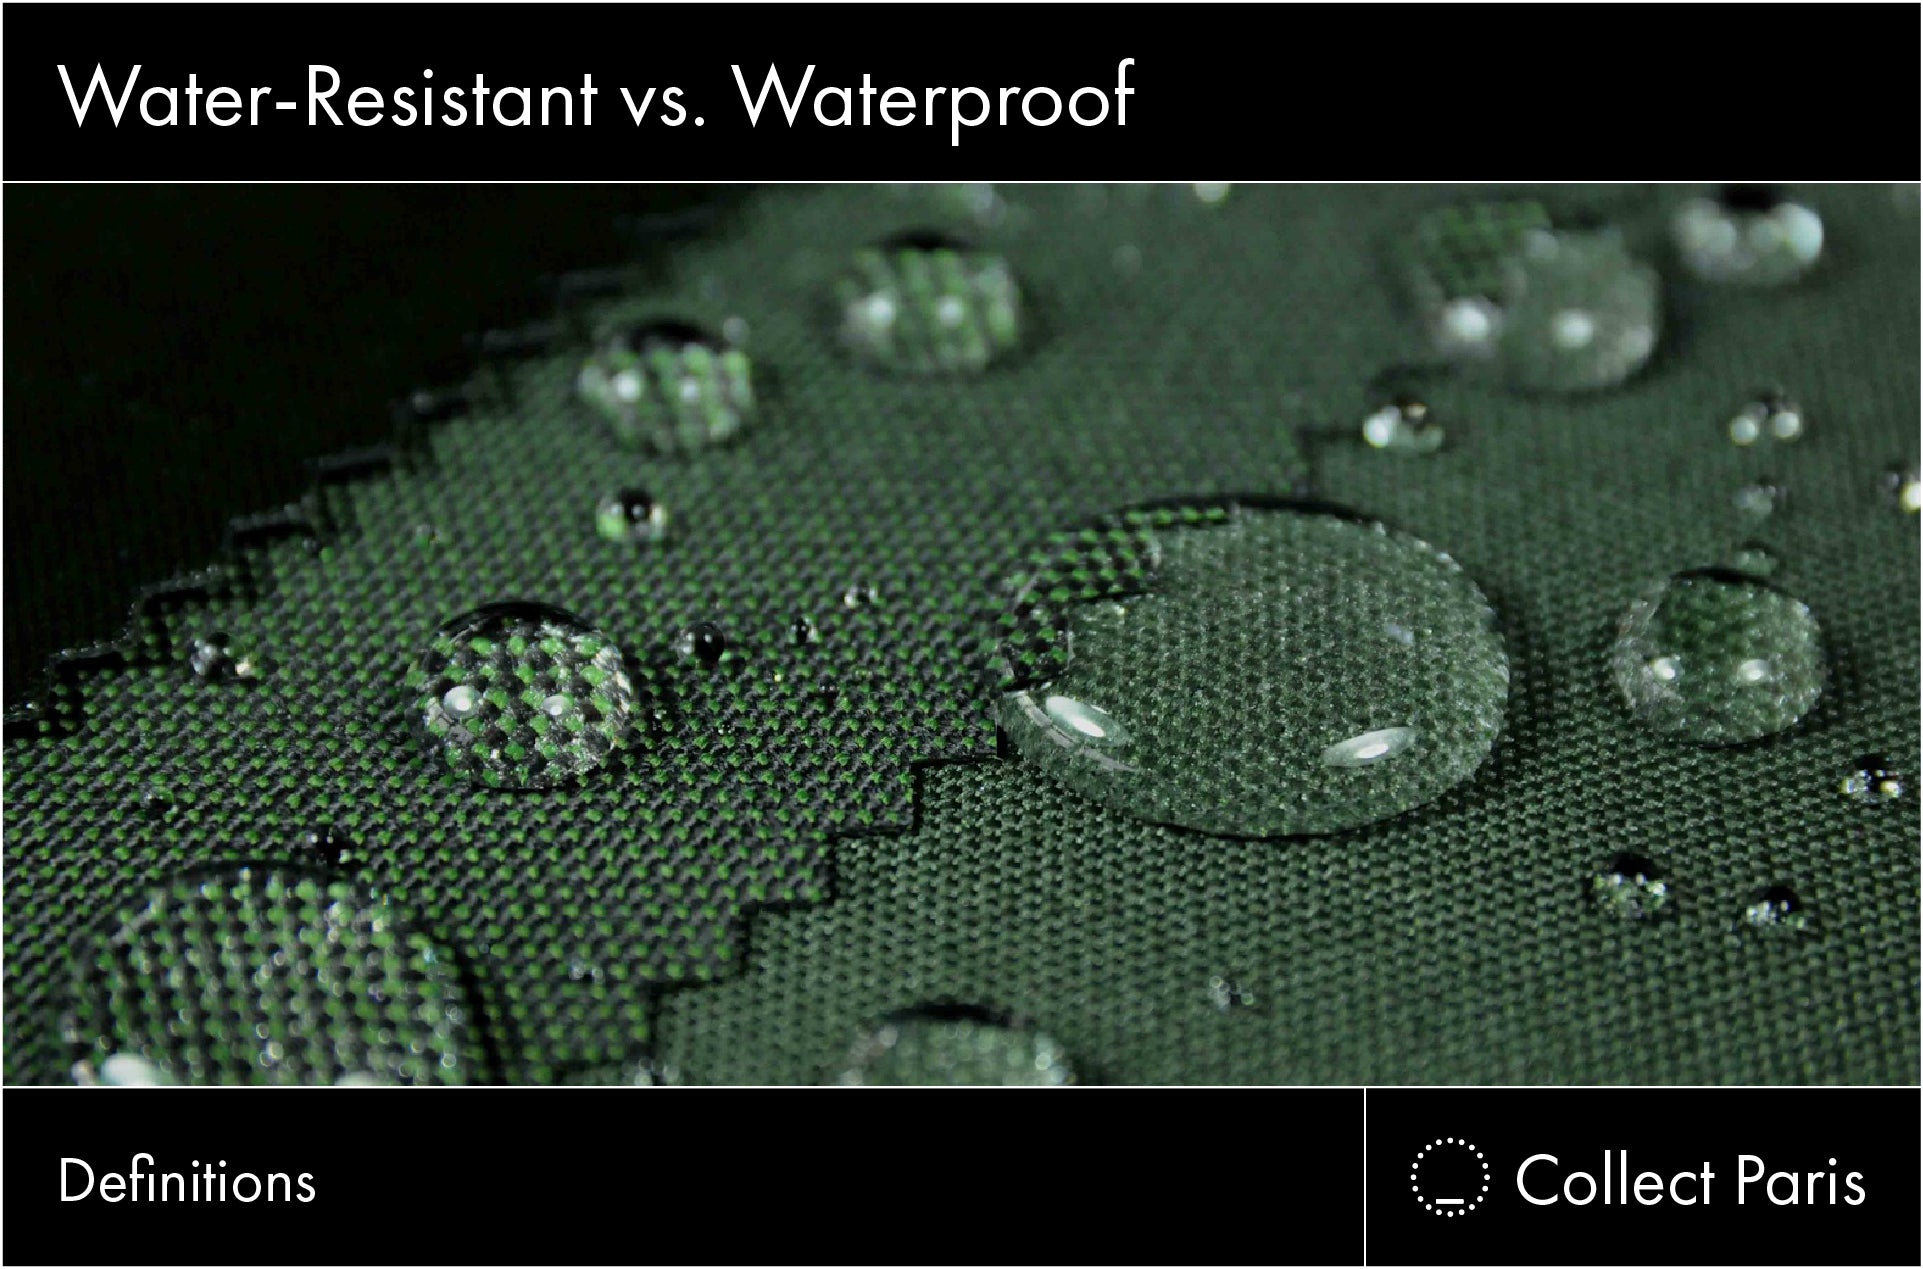 Waterproof vs. water repellent vs. water resistant